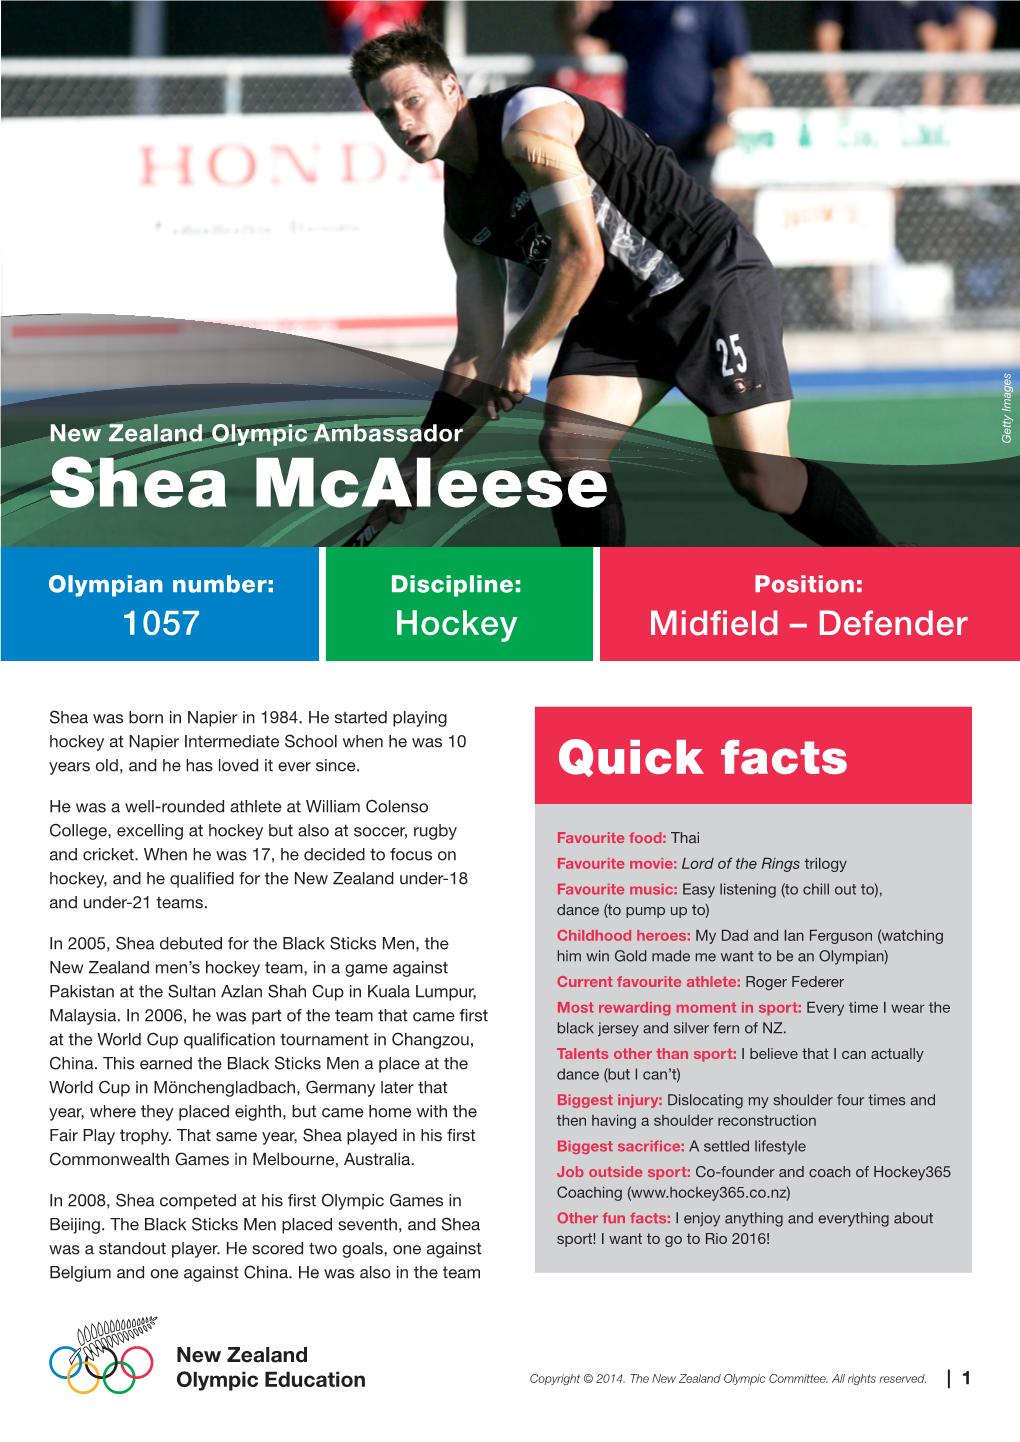 Shea Mcaleese